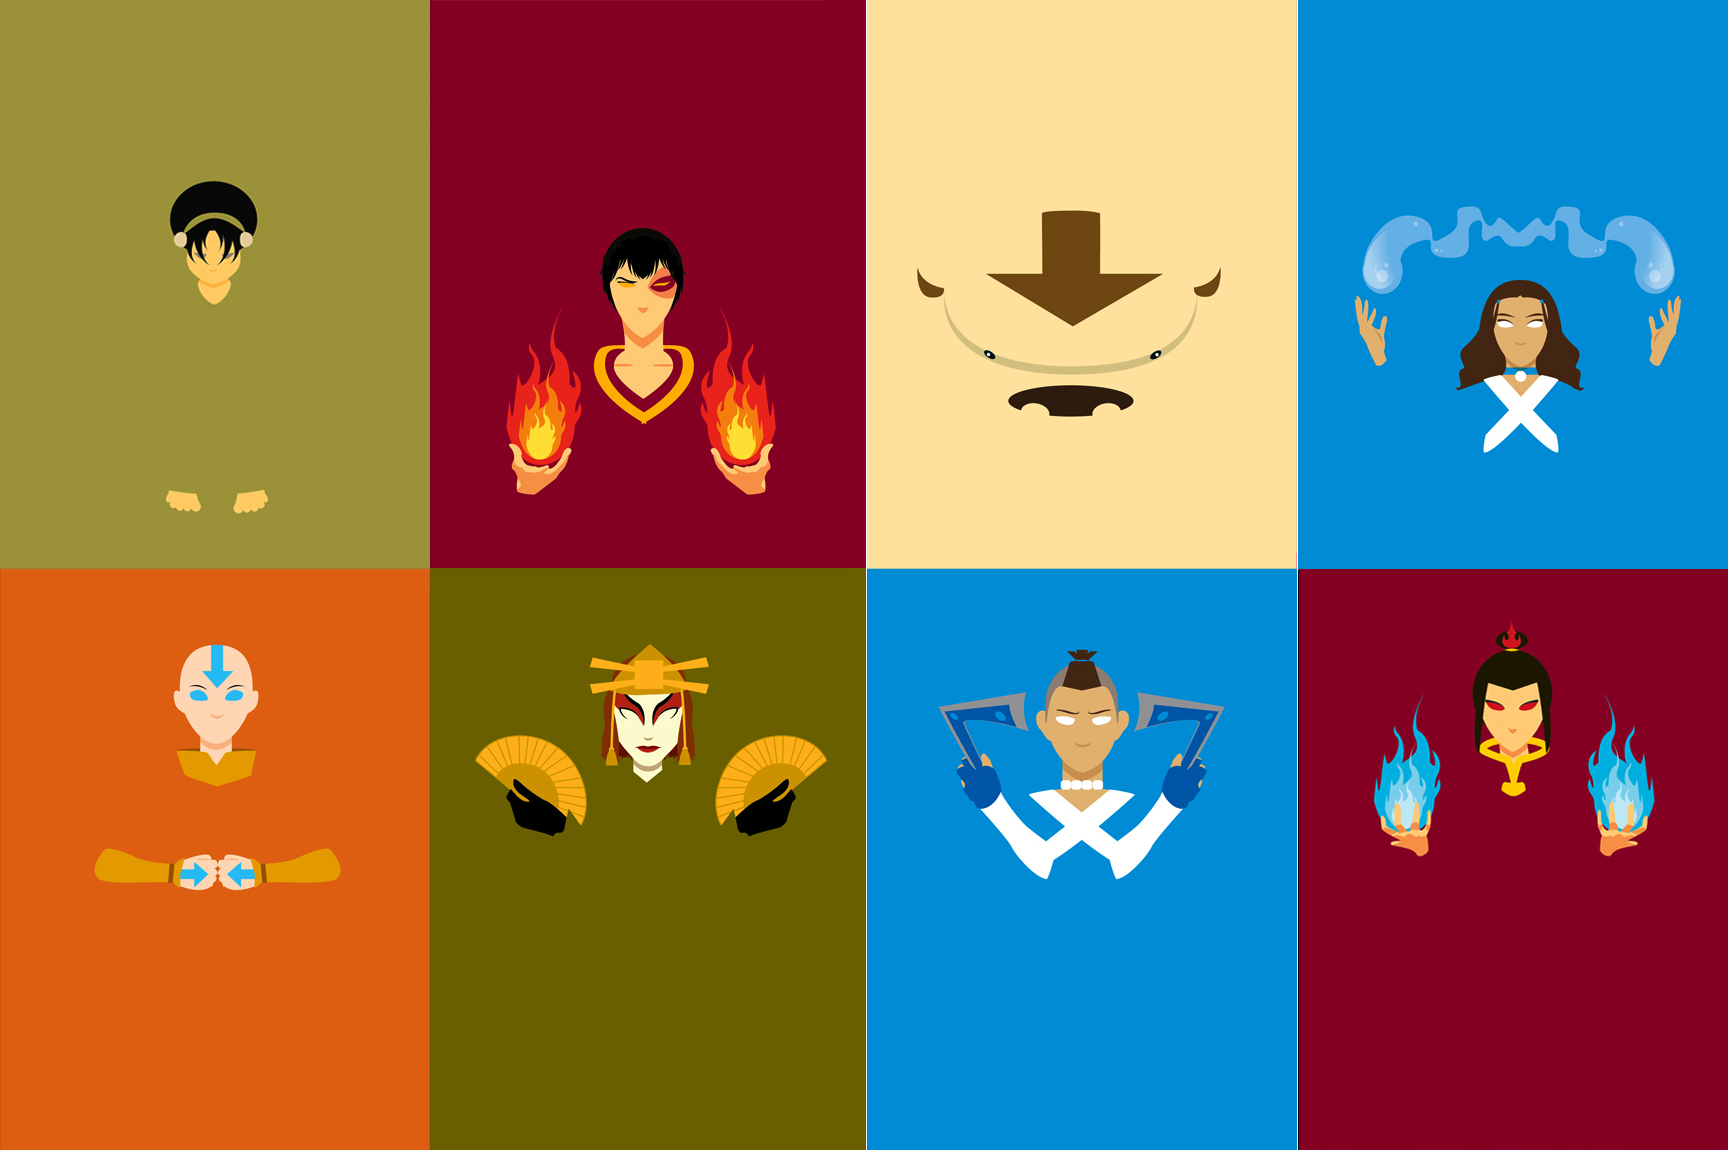 TV Show Avatar: The Last Airbender Wallpaper. Avatar la leyenda